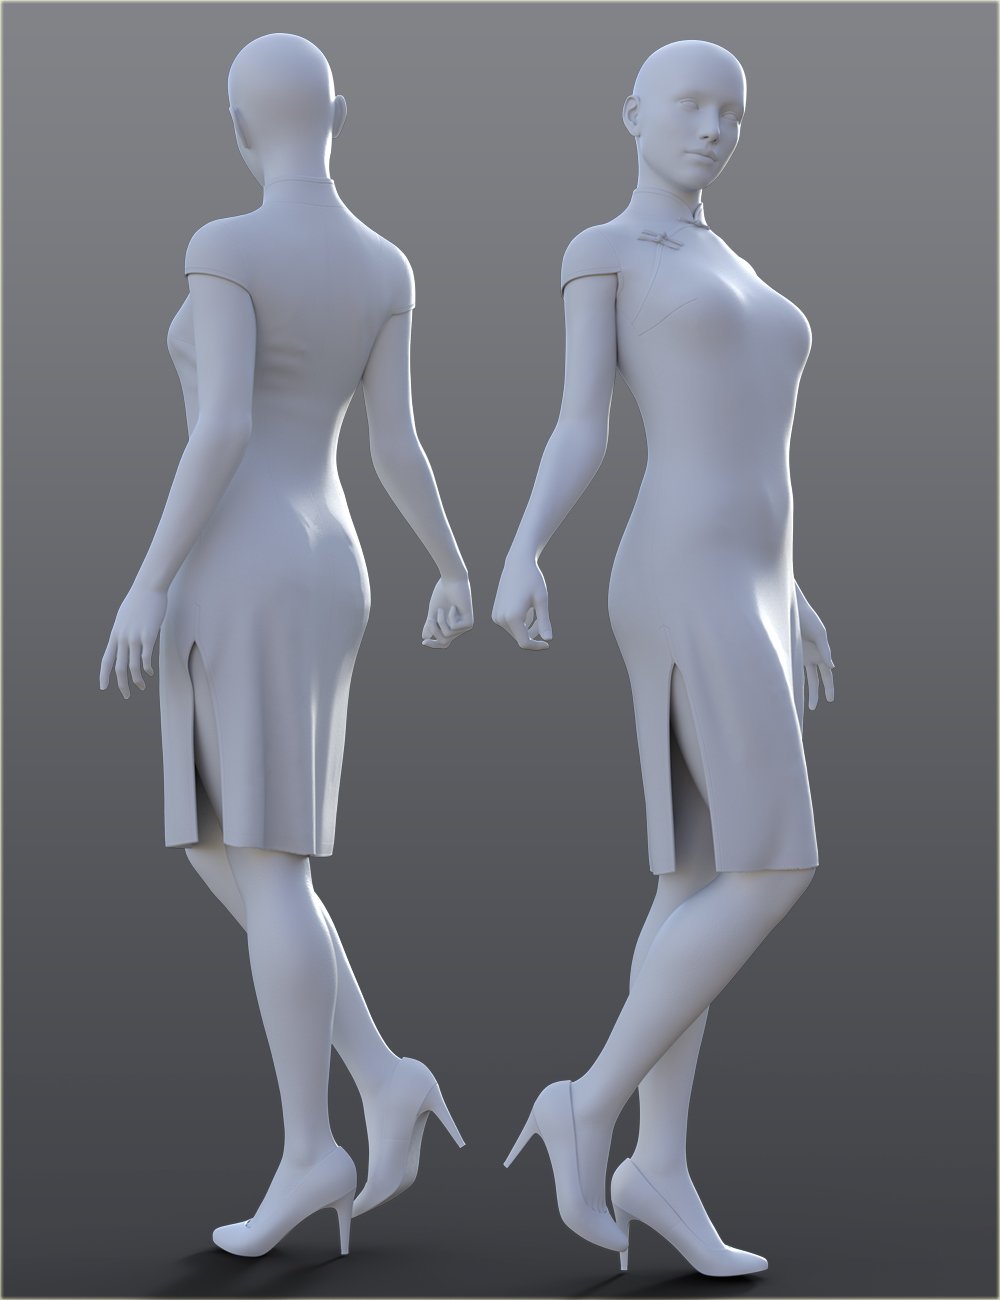 dForce H&C Short Qipao Dress for Genesis 8 Female(s) by: IH Kang, 3D Models by Daz 3D